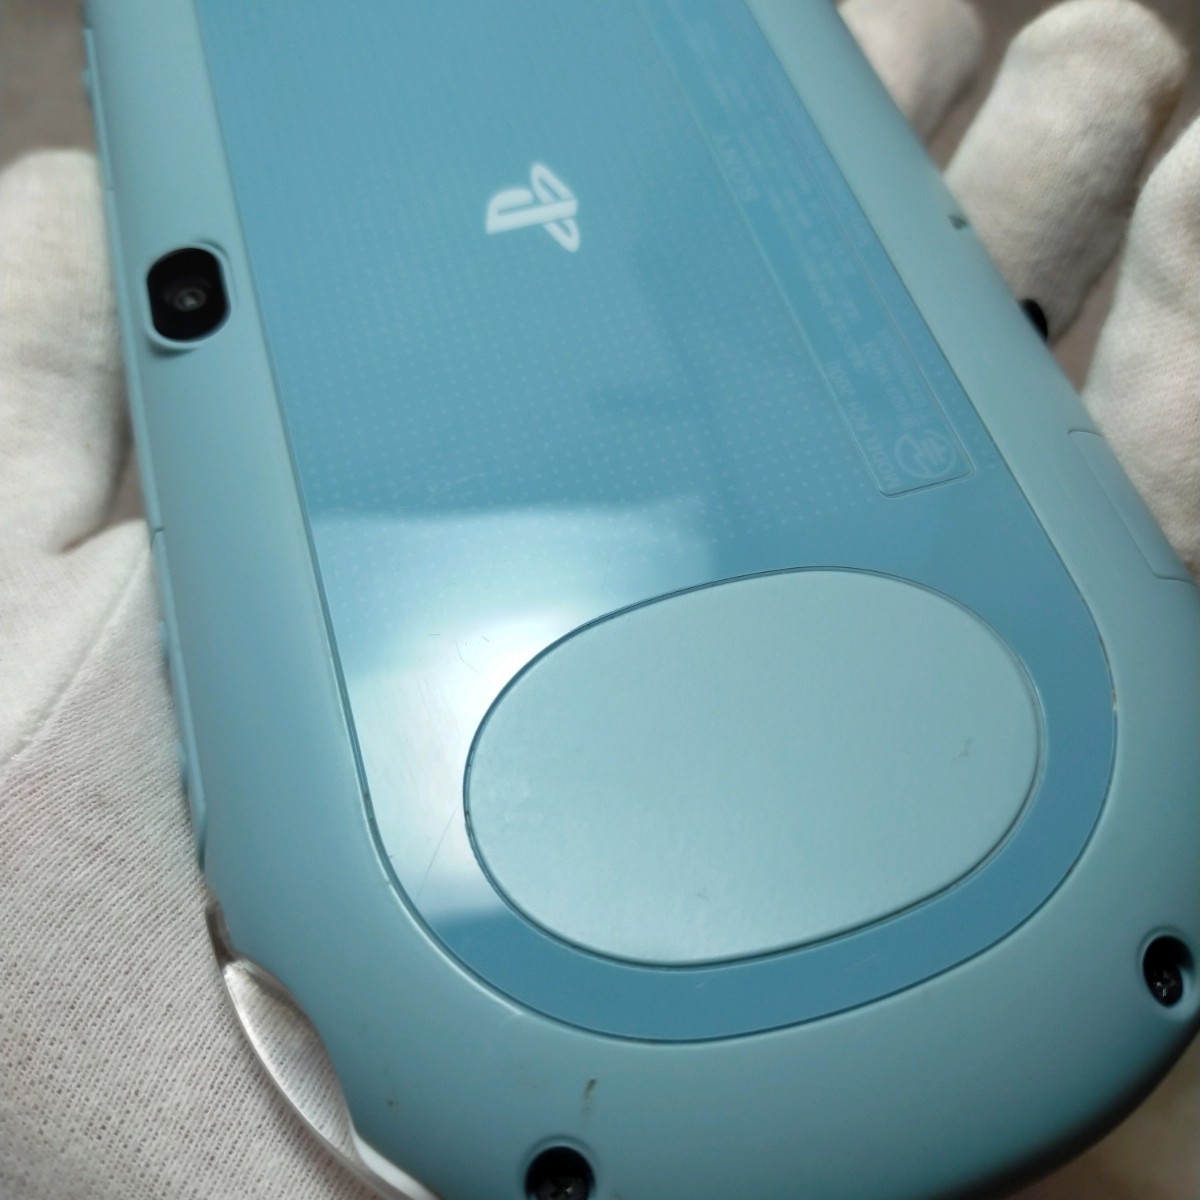 PS Vita PCH-2000 ライトブルー、ホワイト ガラスプロテクタ付き